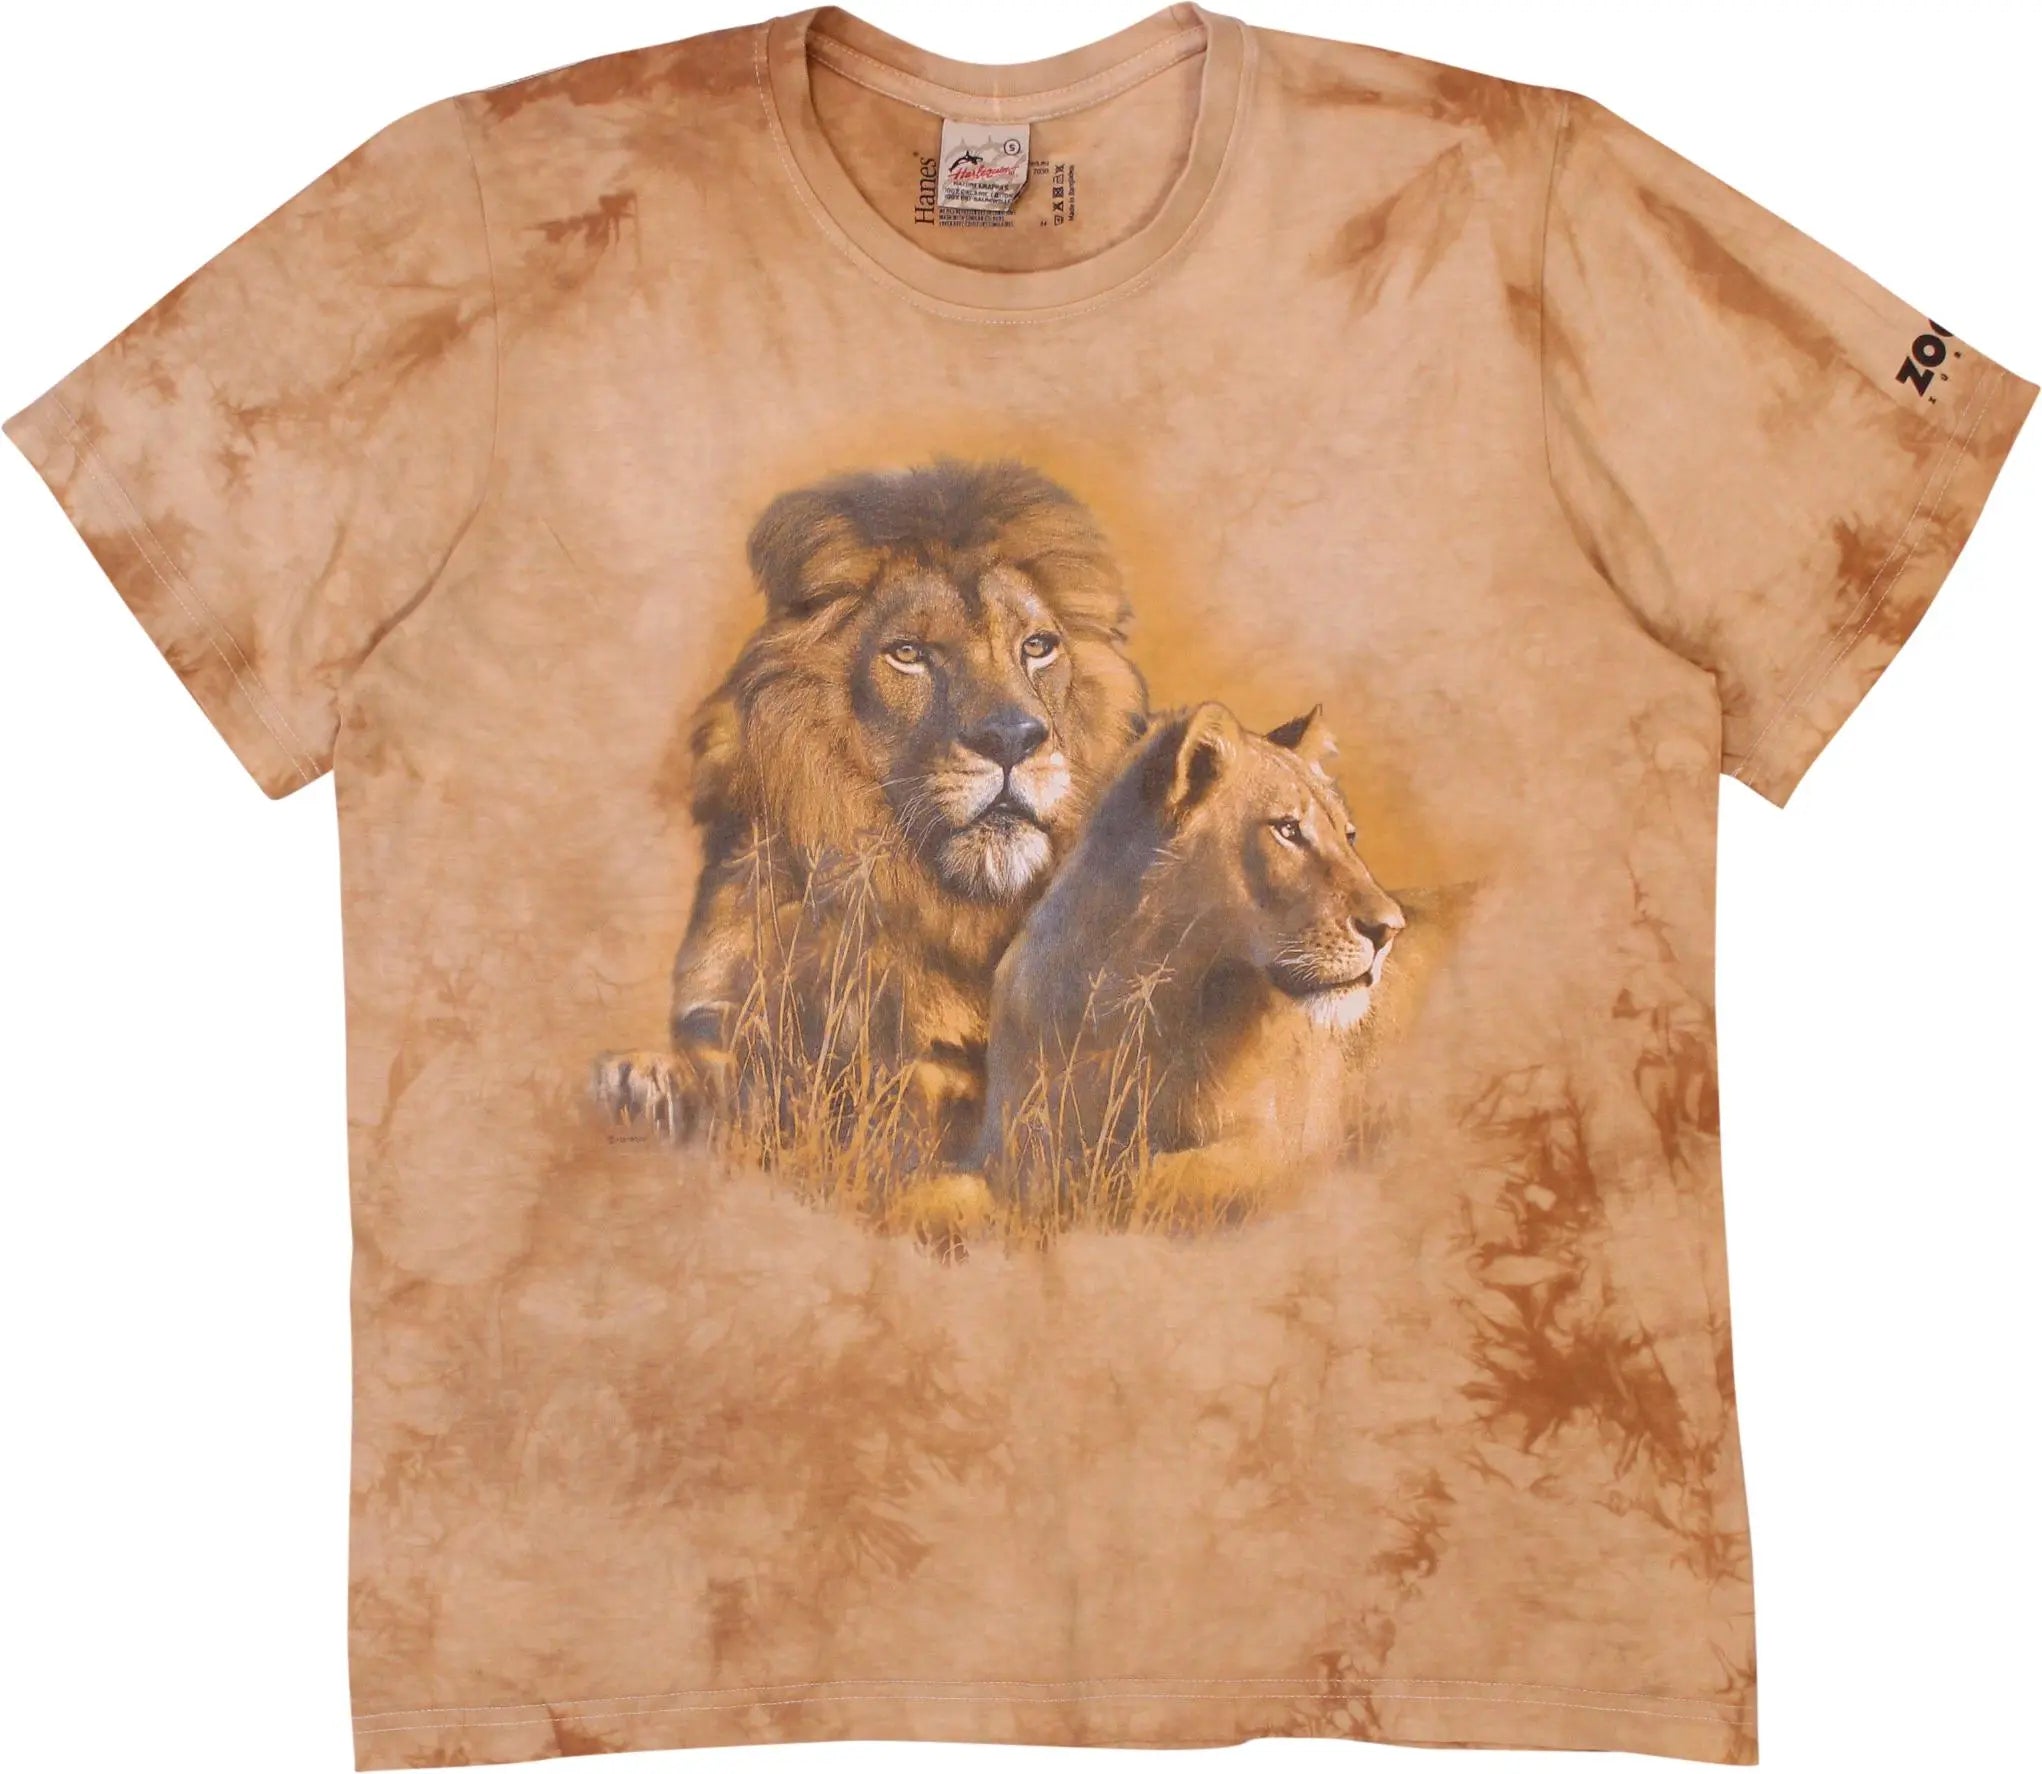 Harlequin - Harlequin Lion Print T-shirt- ThriftTale.com - Vintage and second handclothing